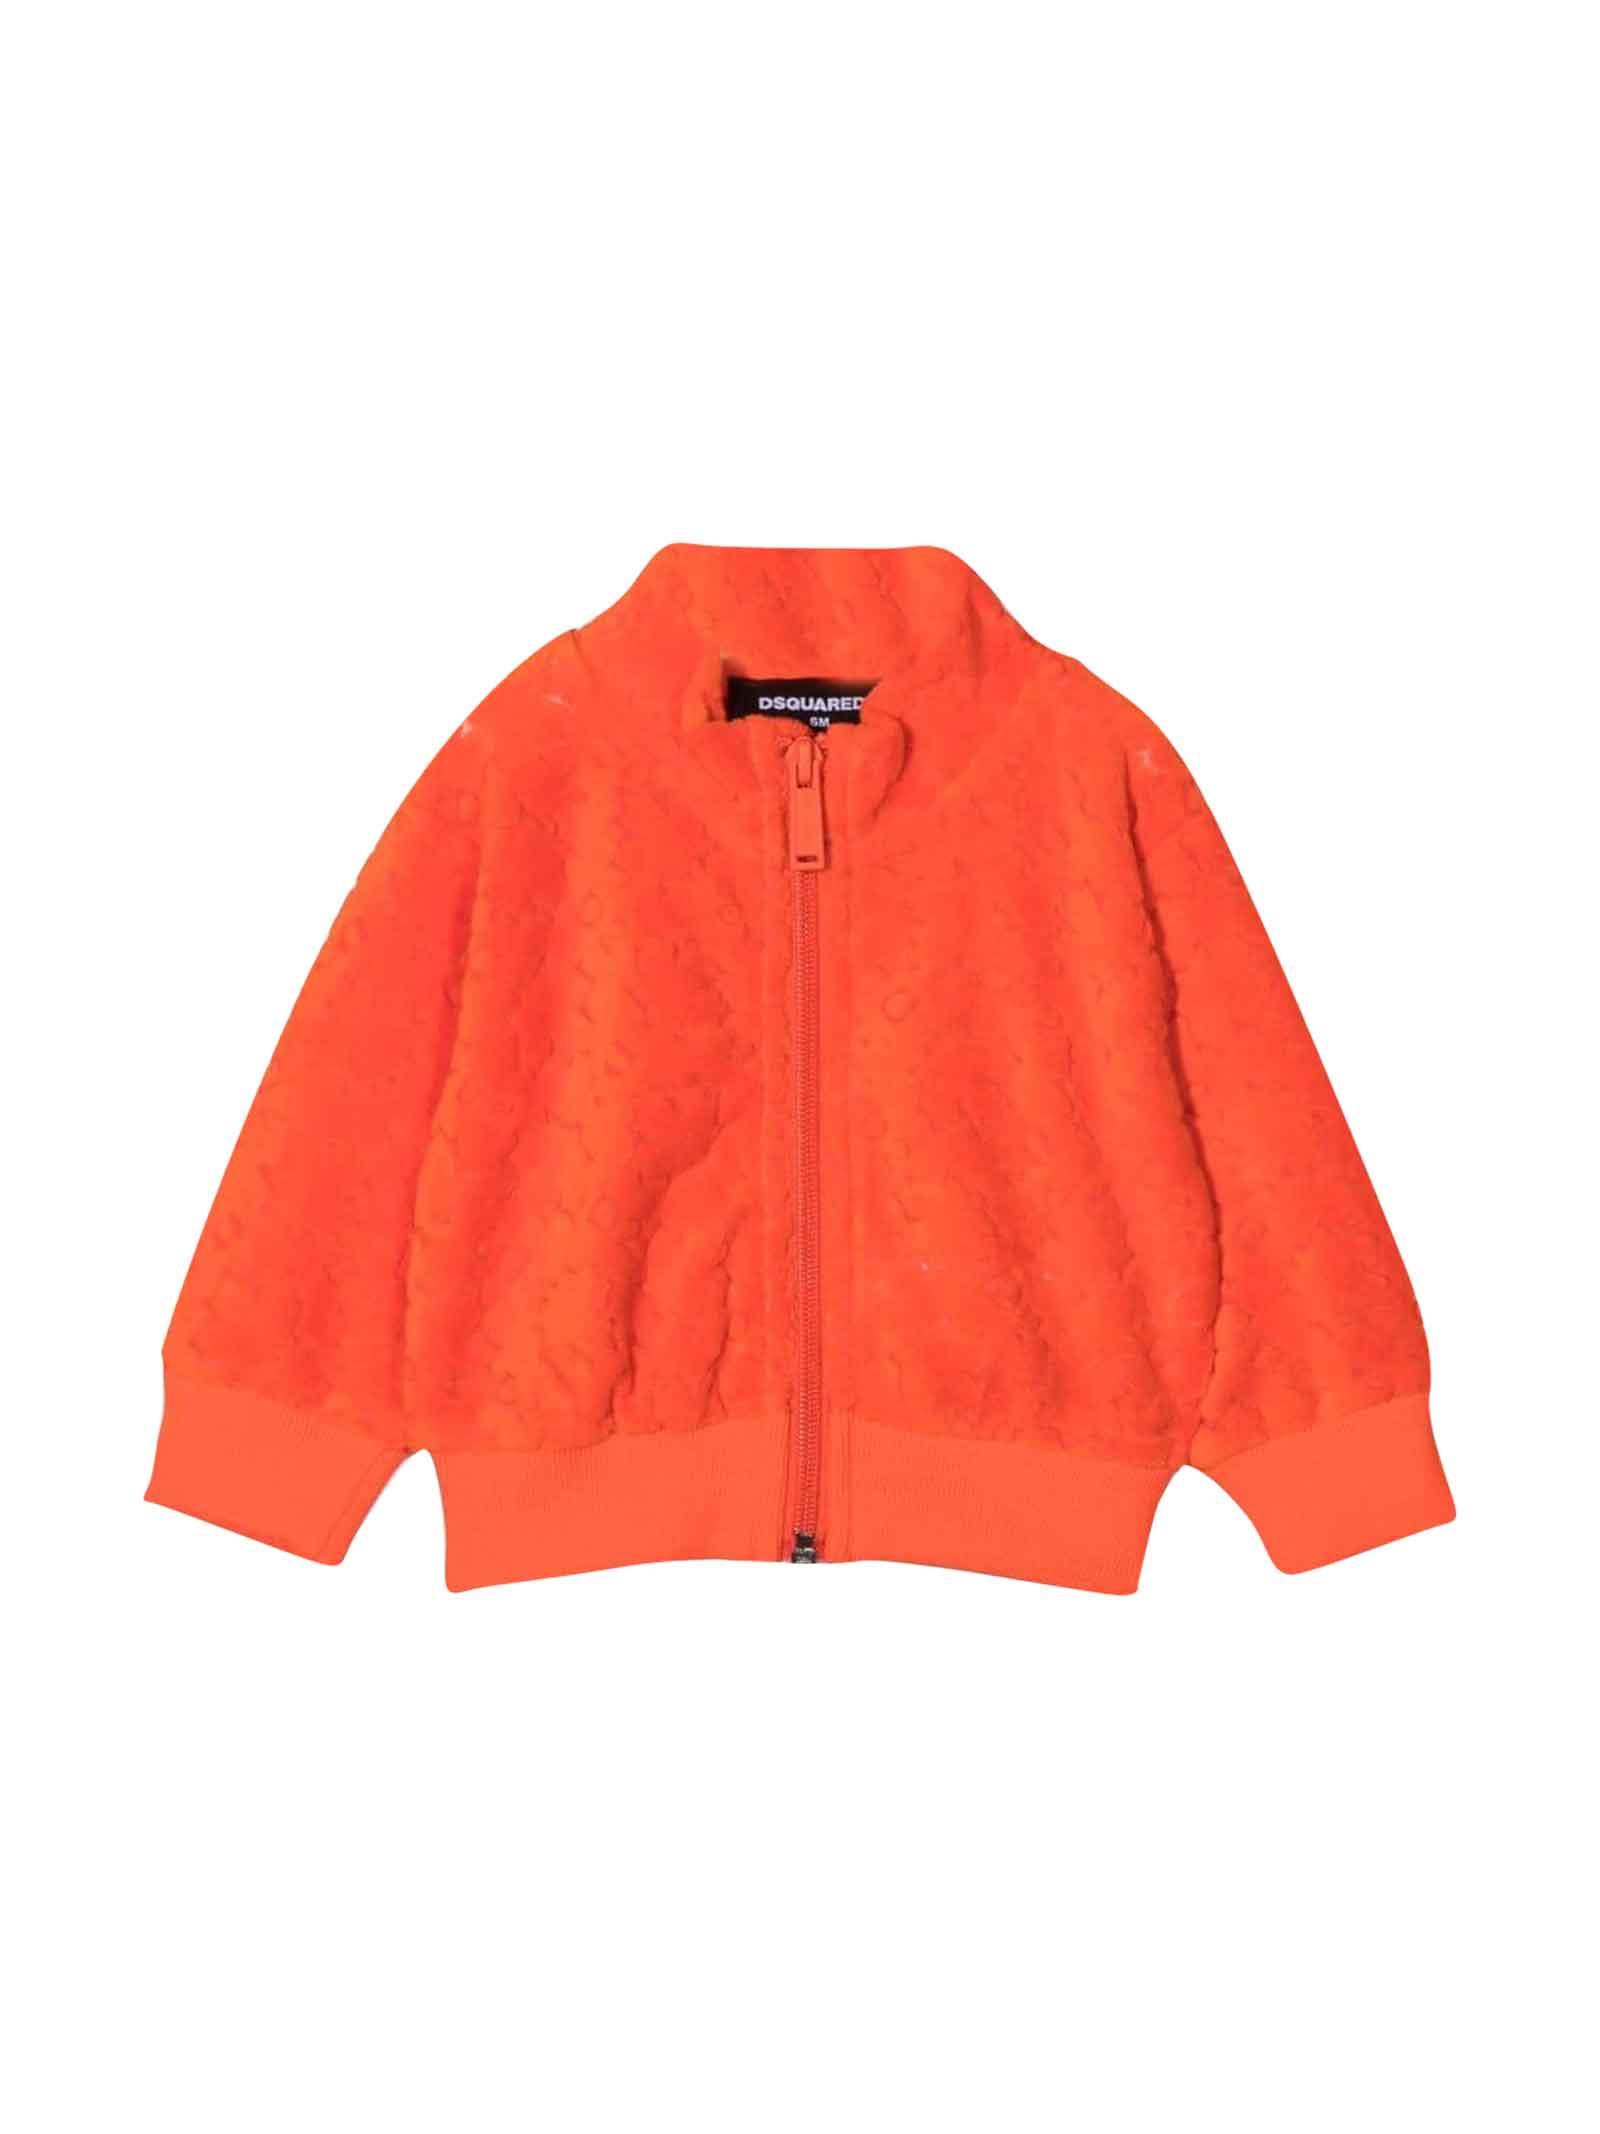 Dsquared2 Orange Sweatshirt Baby Girl